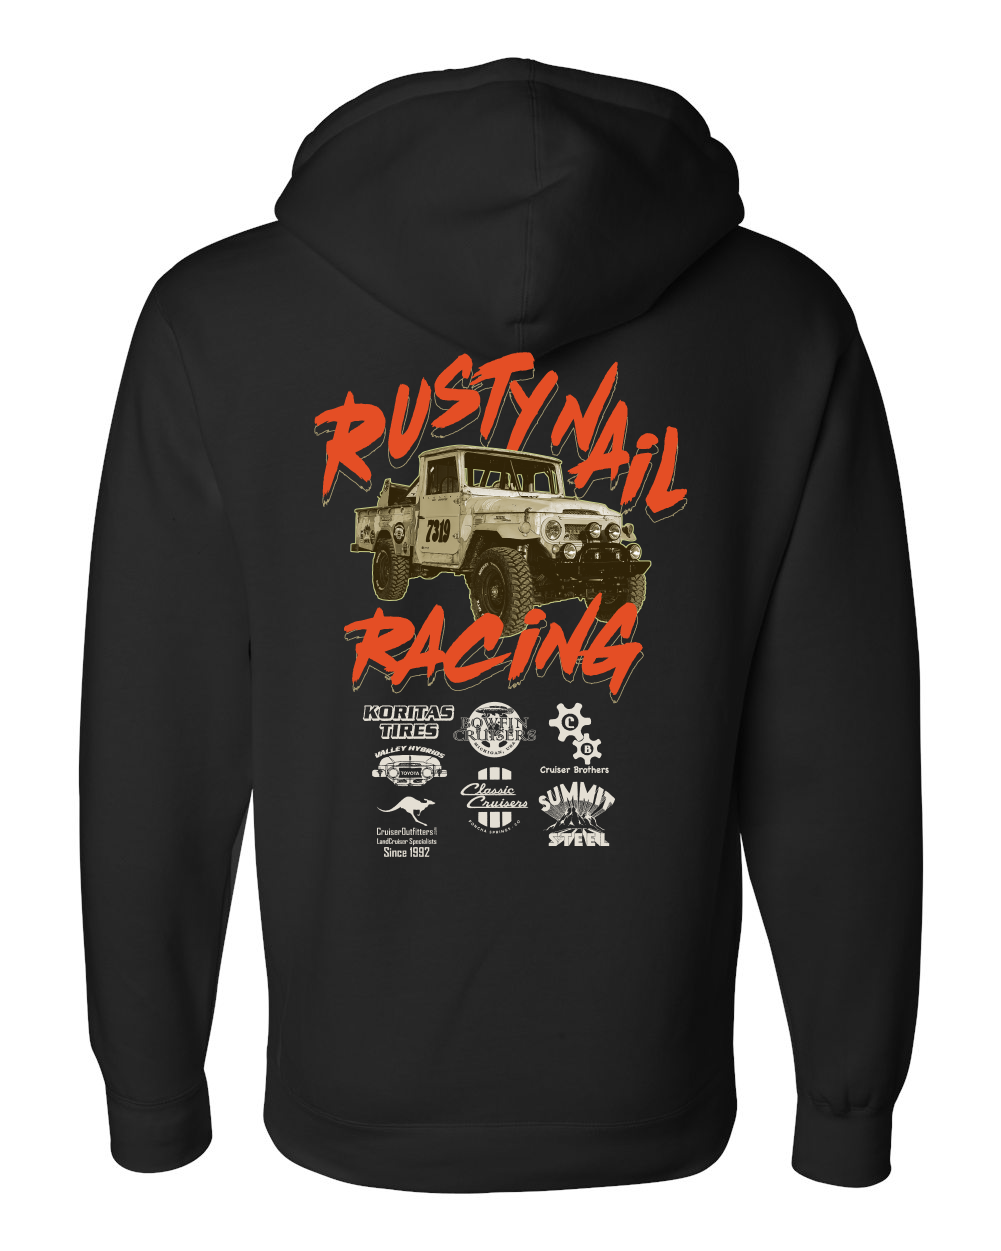 Team Rusty Nail Racing #7319